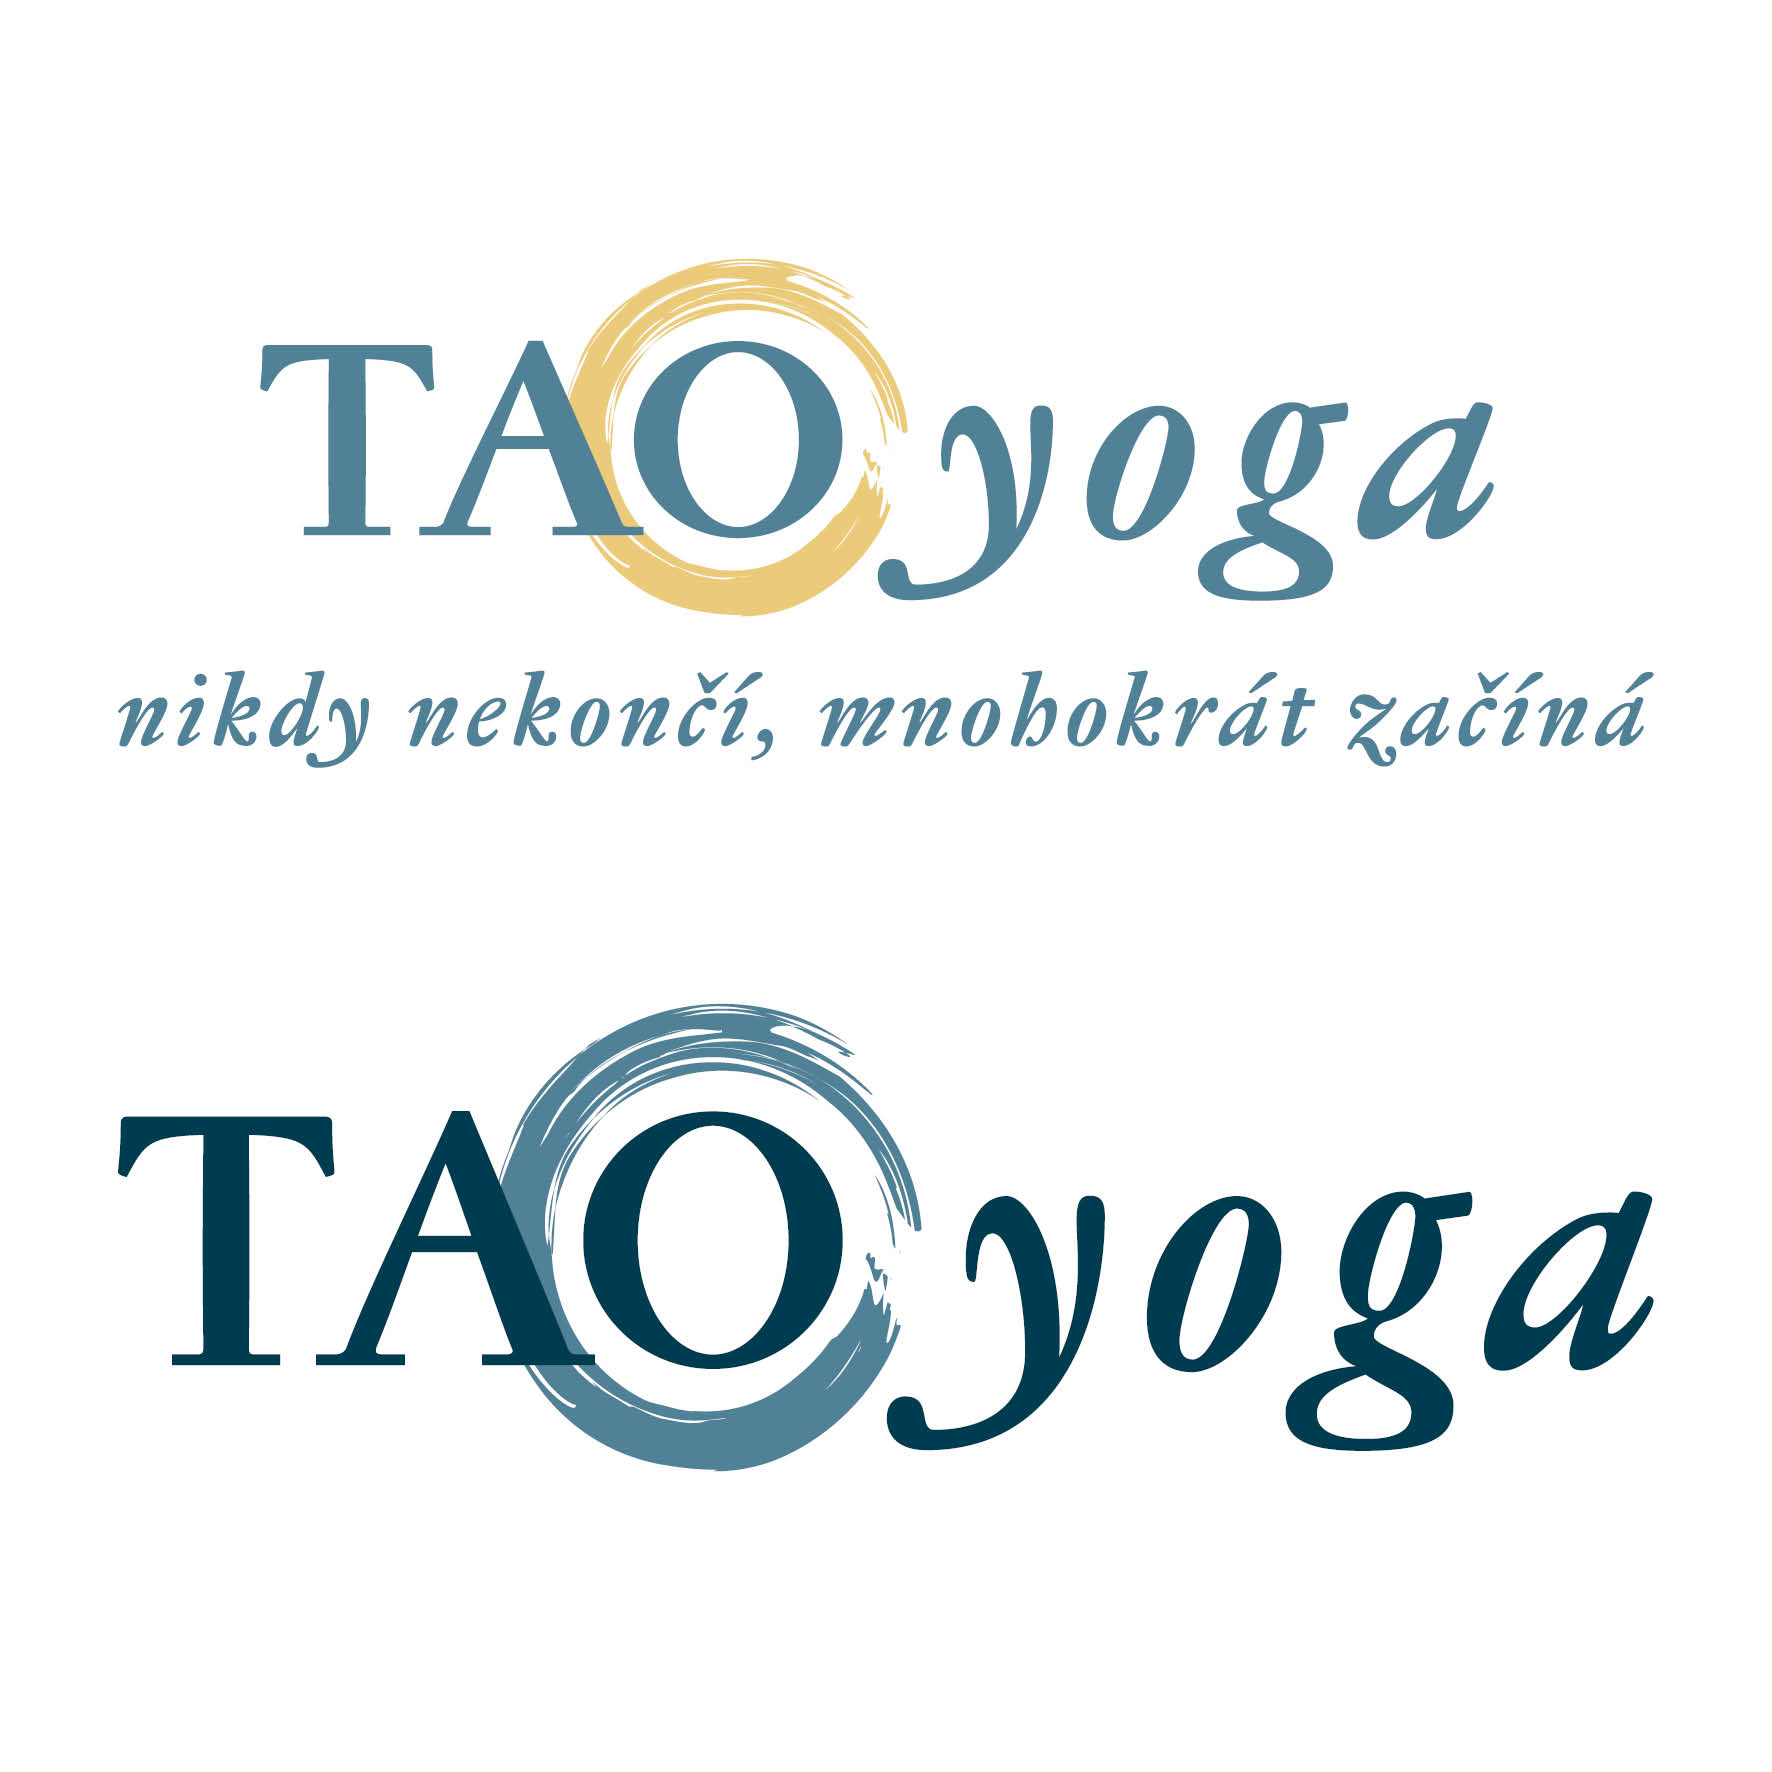 Tao yoga